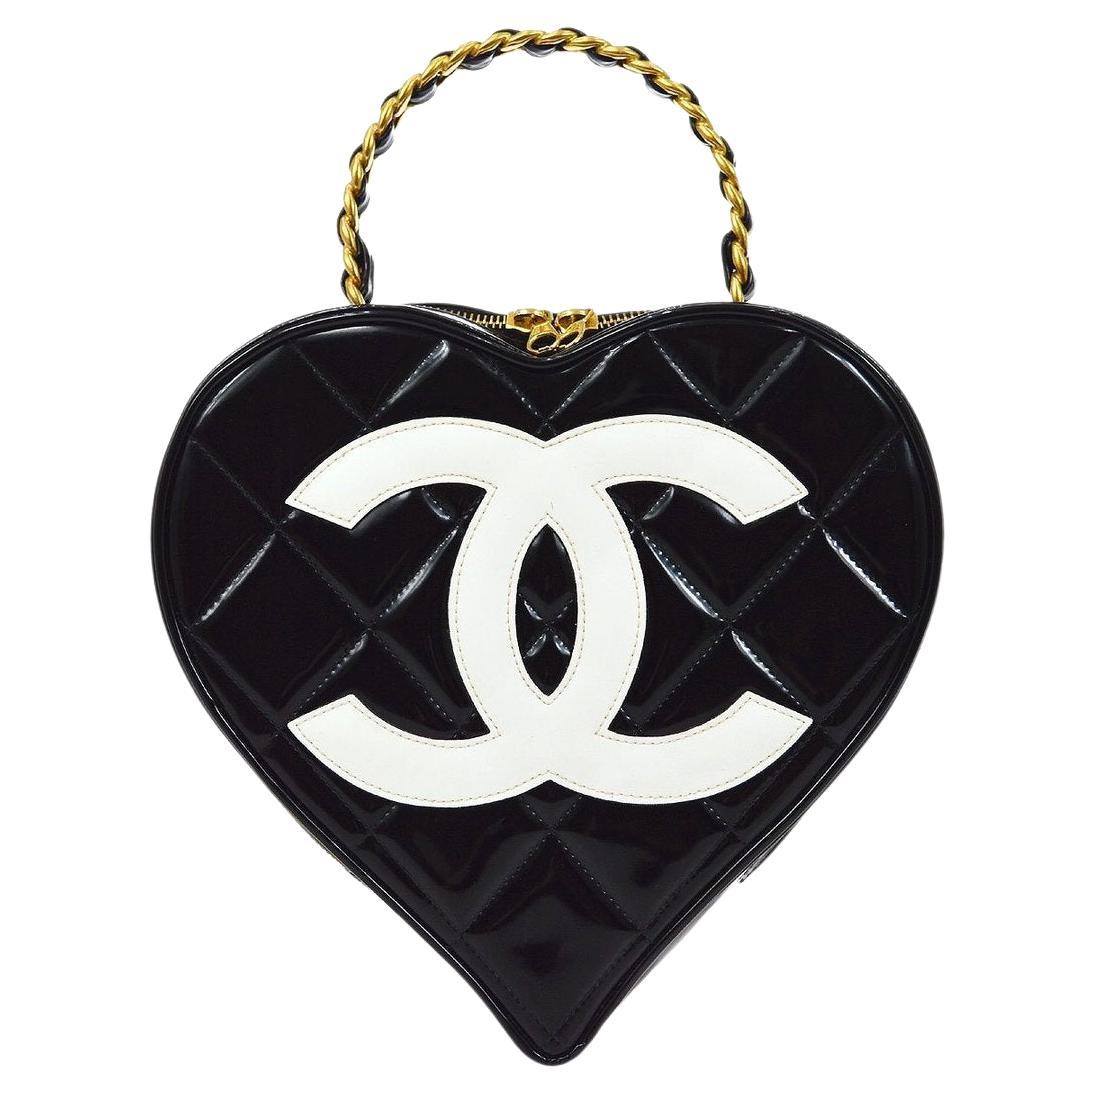 CHANEL CC Black White Patent Leather Heart Vanity Top Handle Satchel Bag